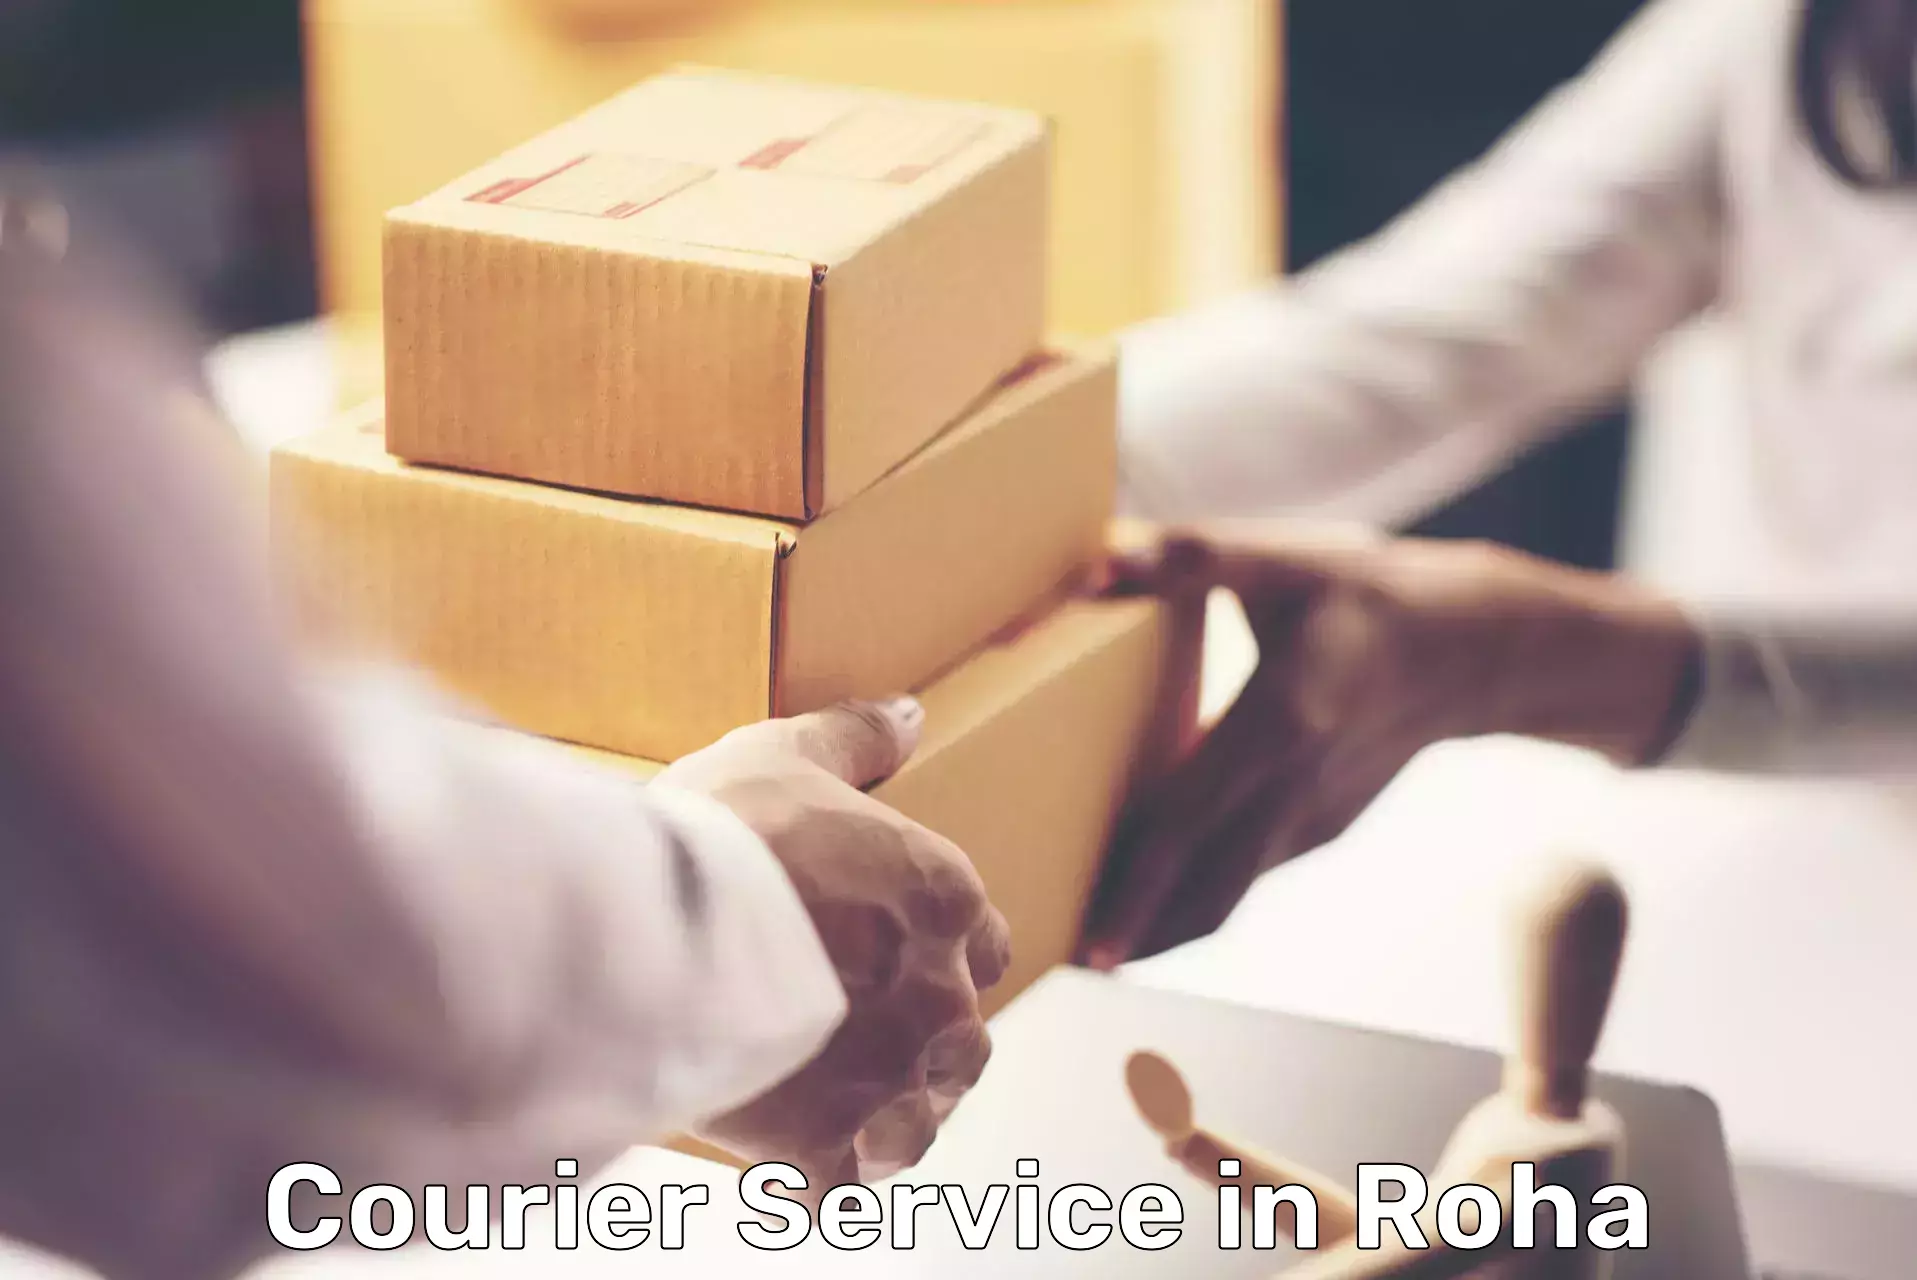 E-commerce shipping in Roha